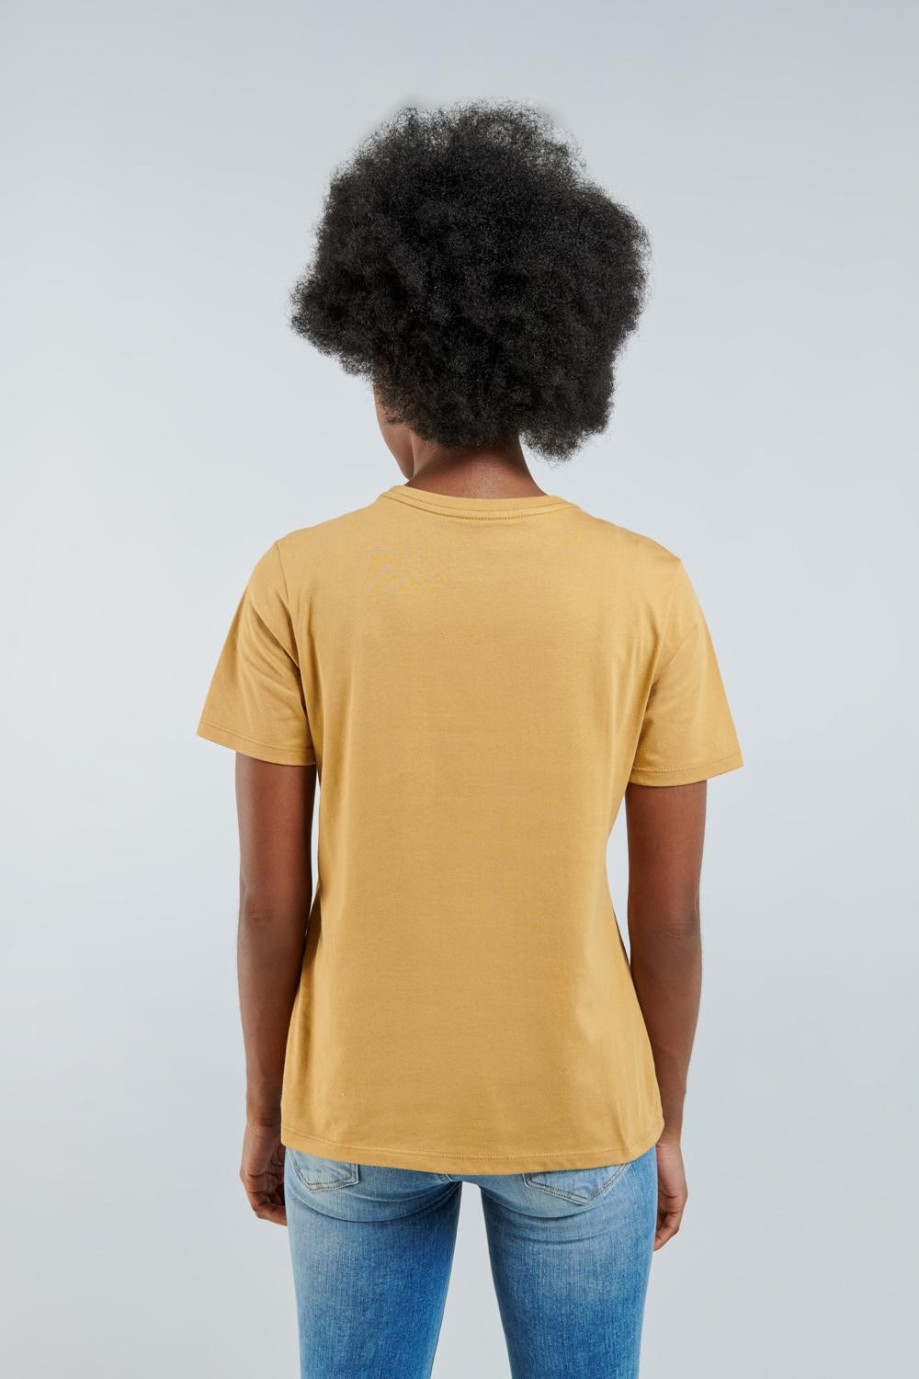 Camiseta para mujer manga corta estampada en frente estilo college cuello redondo